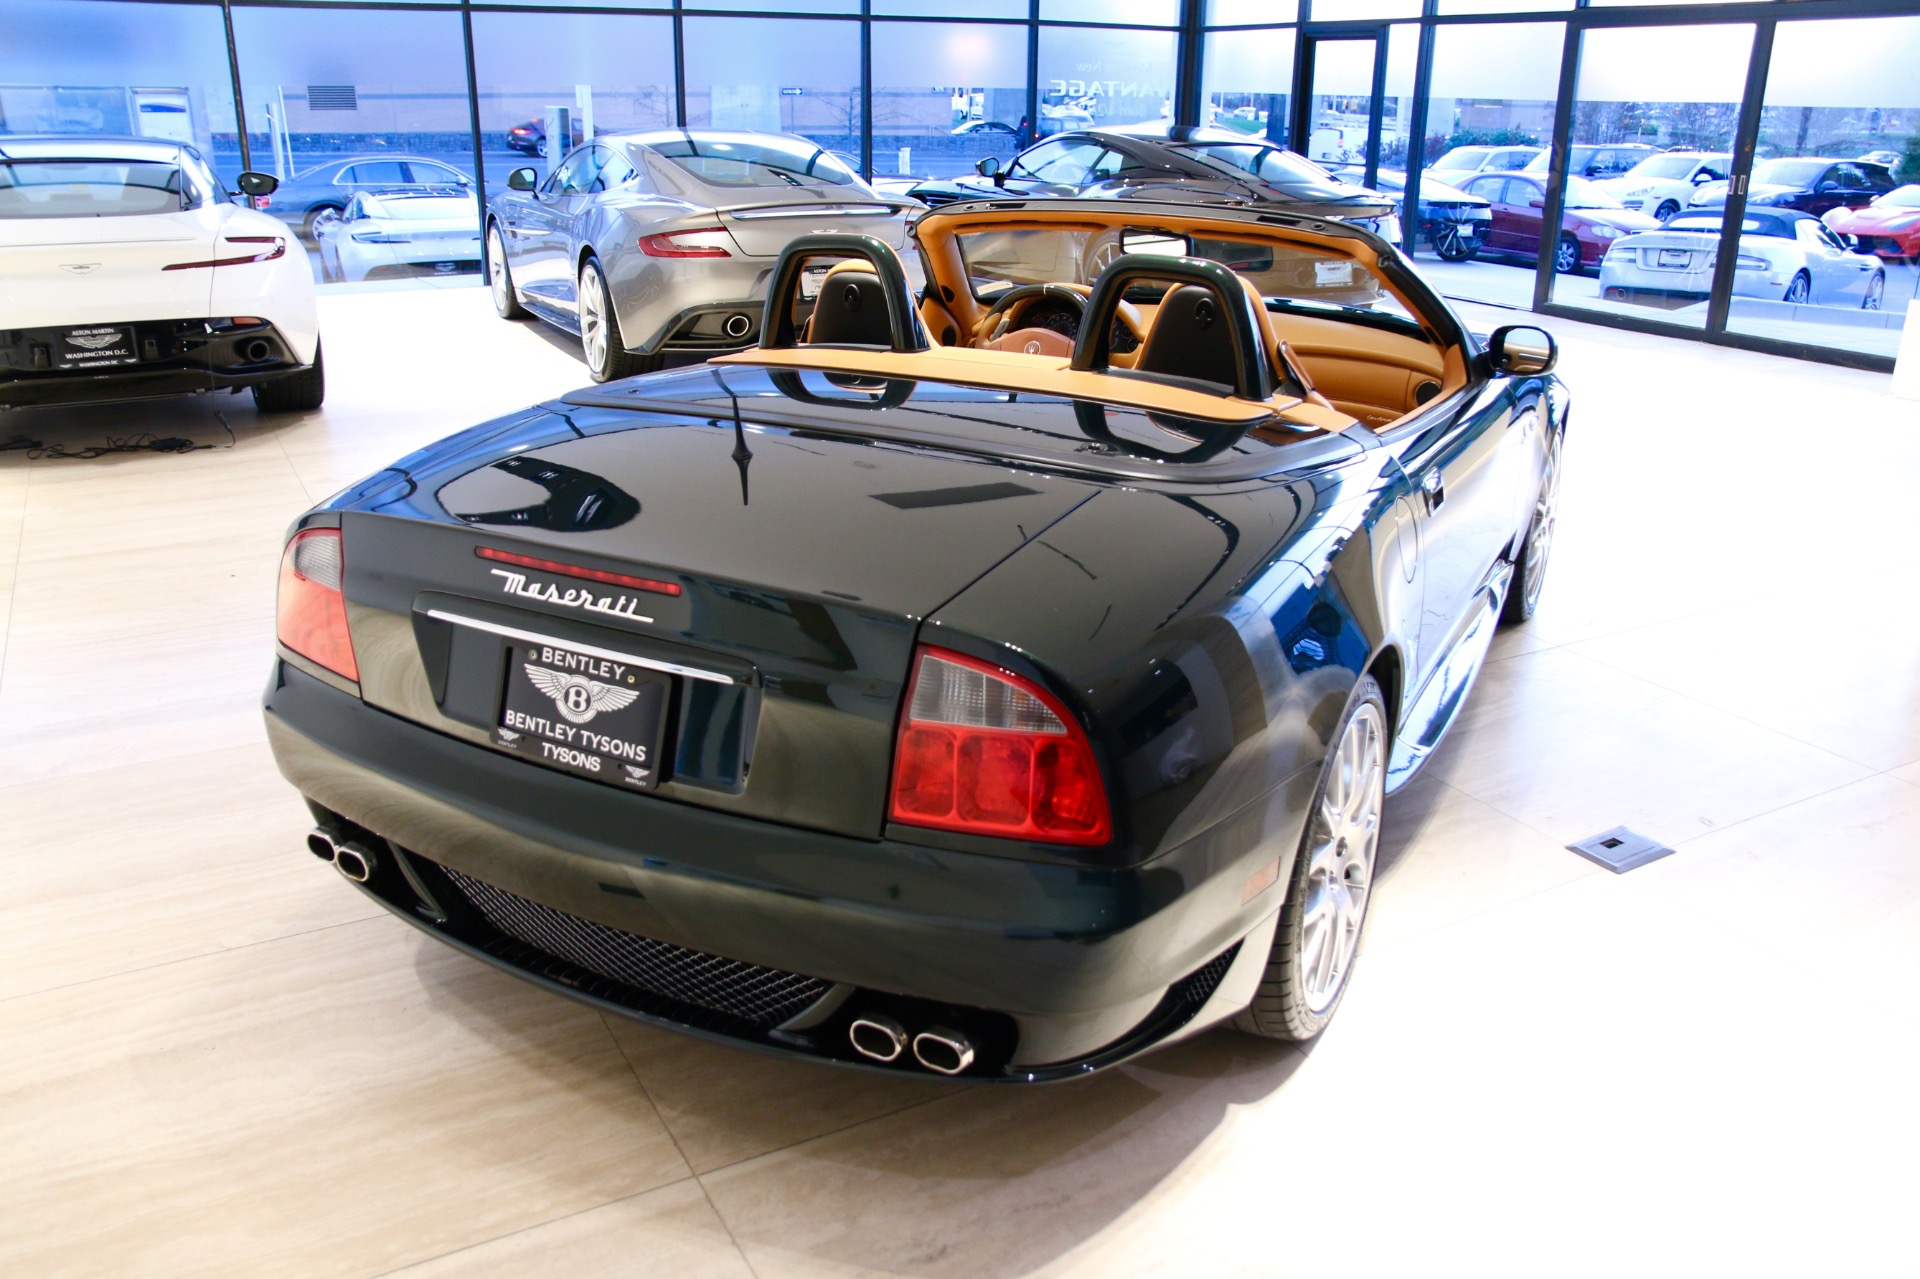 2006 Maserati GranSport Spyder Stock # 7NL02478B for sale ...